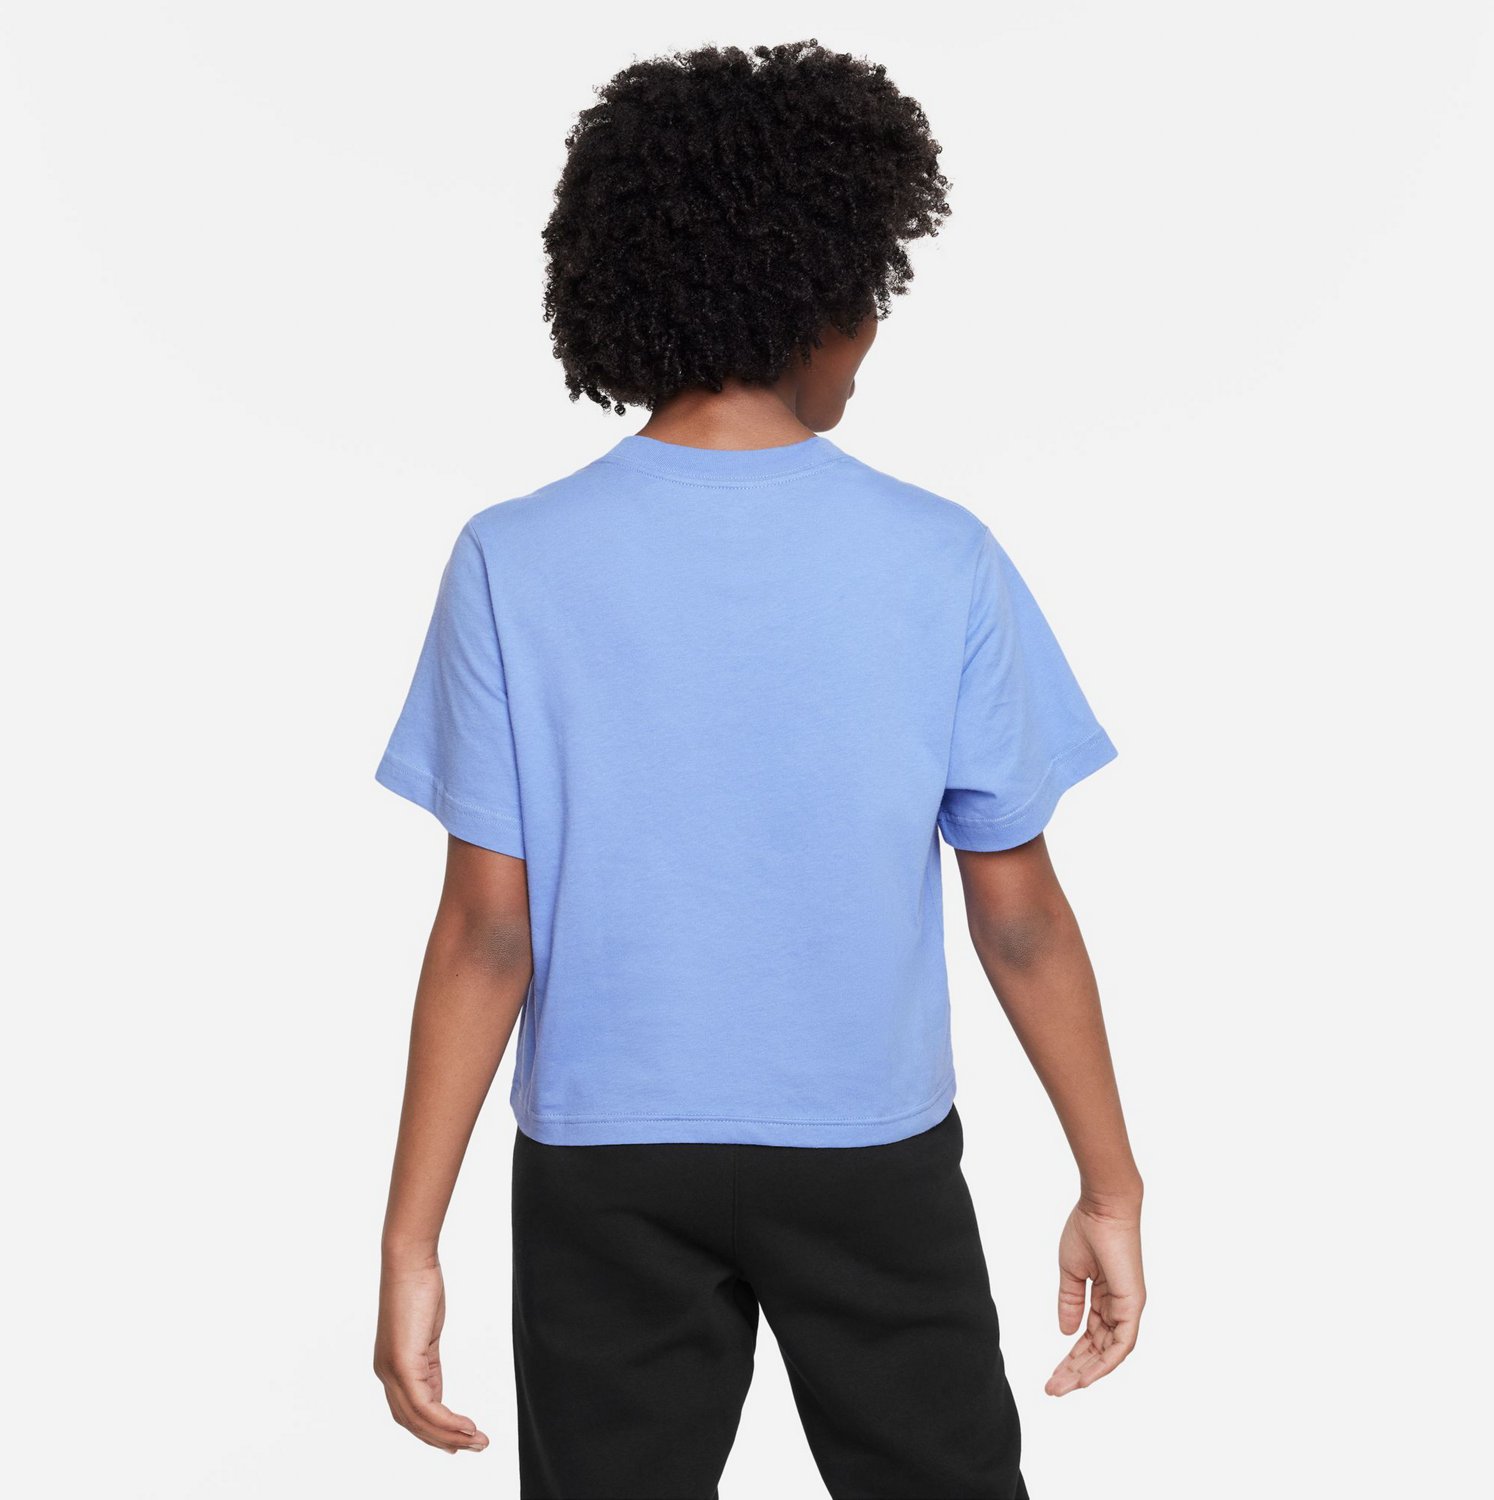 RTLS $55 SET - Nike Girls Blue Hoodie Dry T-Shirt & Compression Shorts Sz M  $25.99 - PicClick